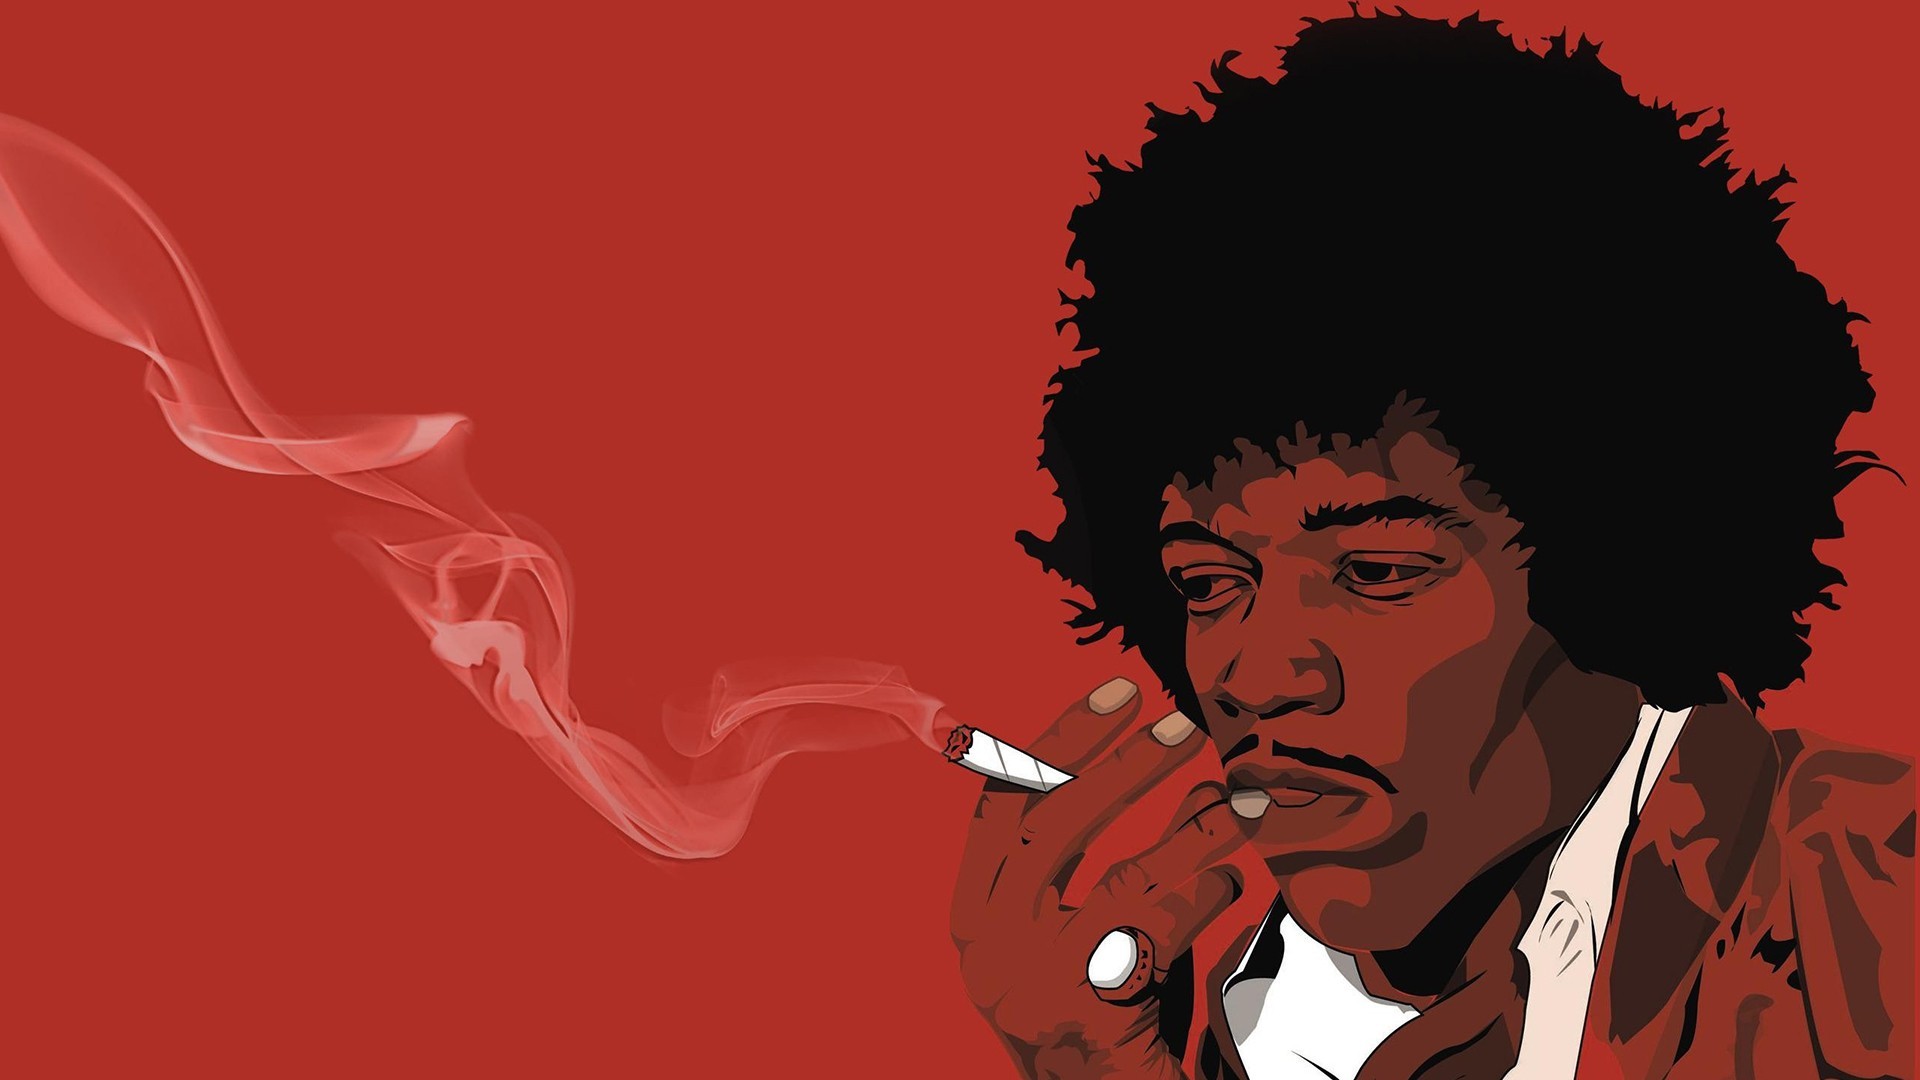 General 1920x1080 Jimi Hendrix musician fan art red joint music red background simple background digital art closeup smoking